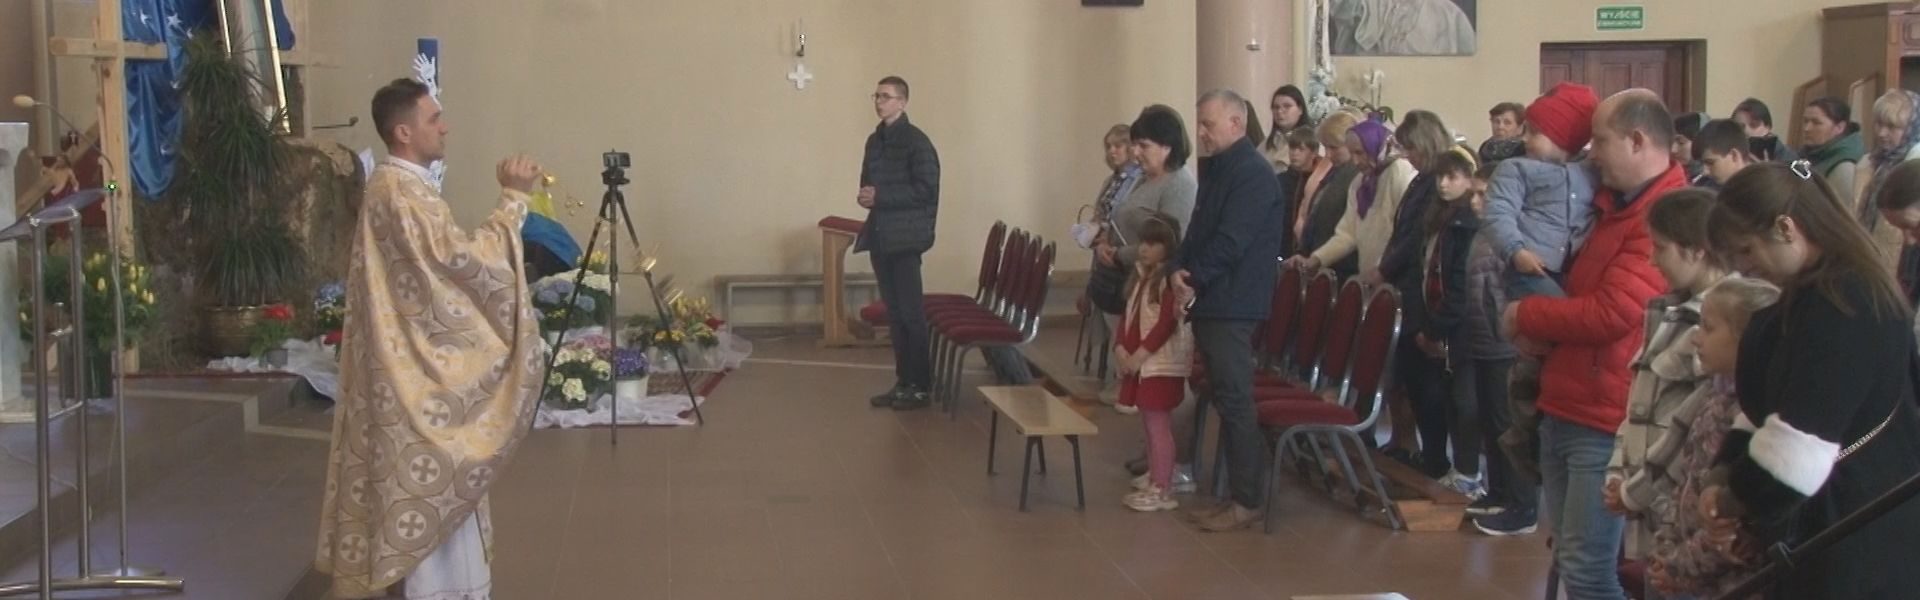 Liturgia wielkanocna po ukraińsku